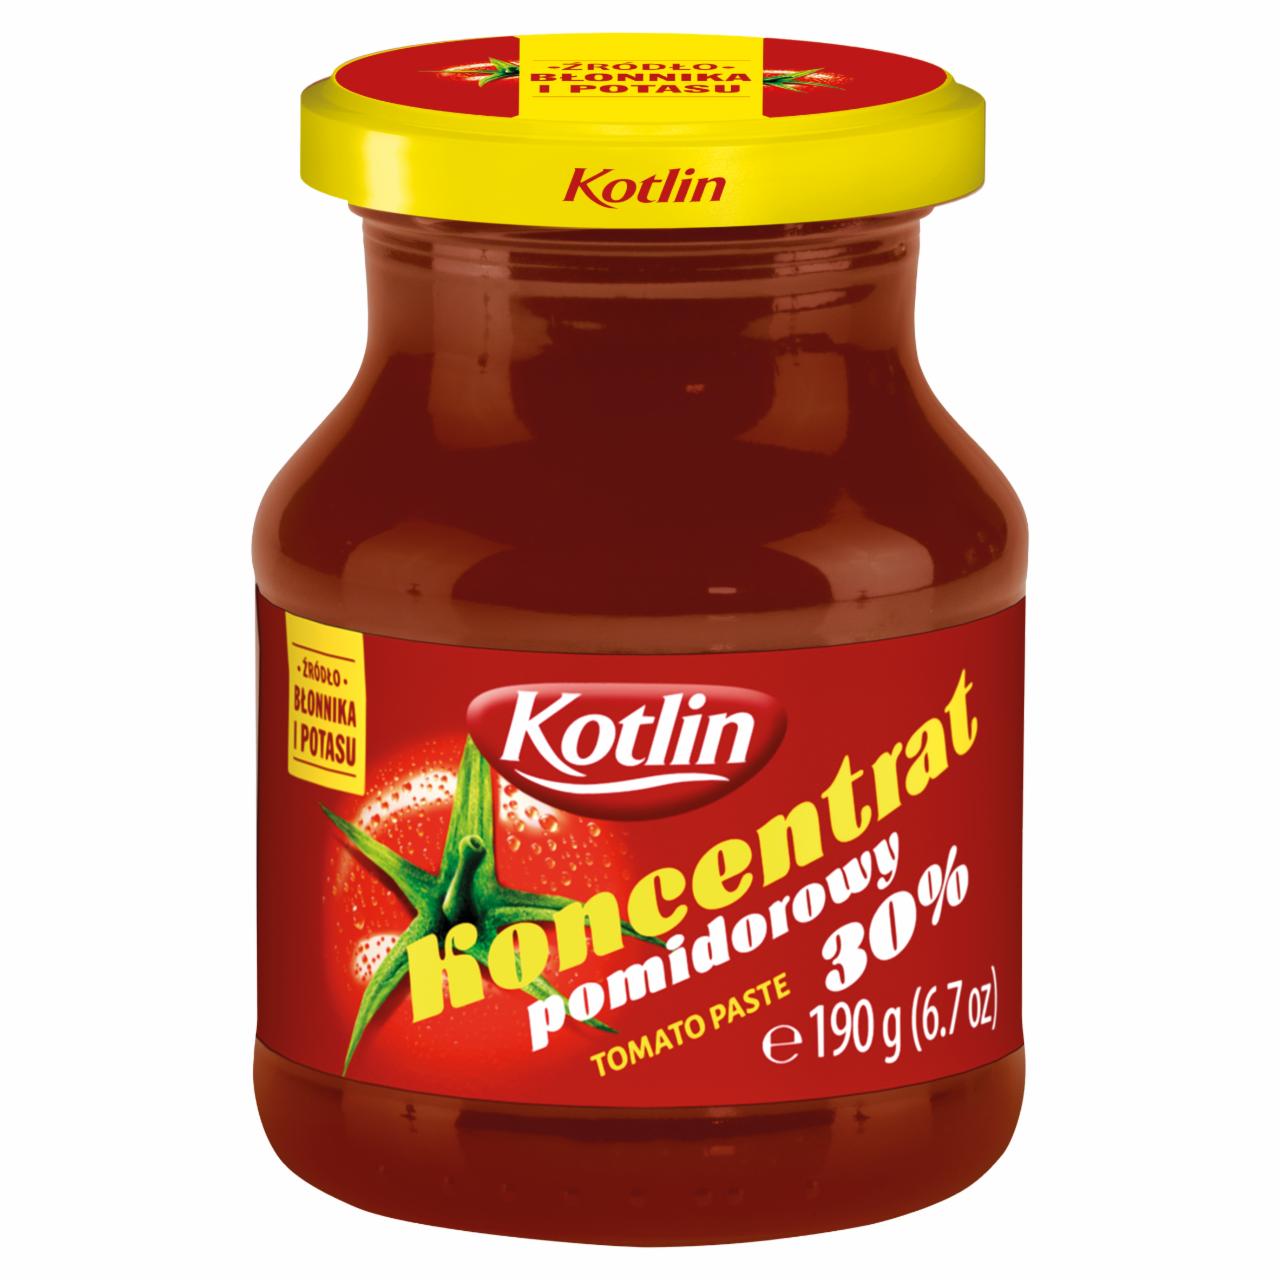 Zdjęcia - Kotlin Koncentrat pomidorowy 28% 190 g